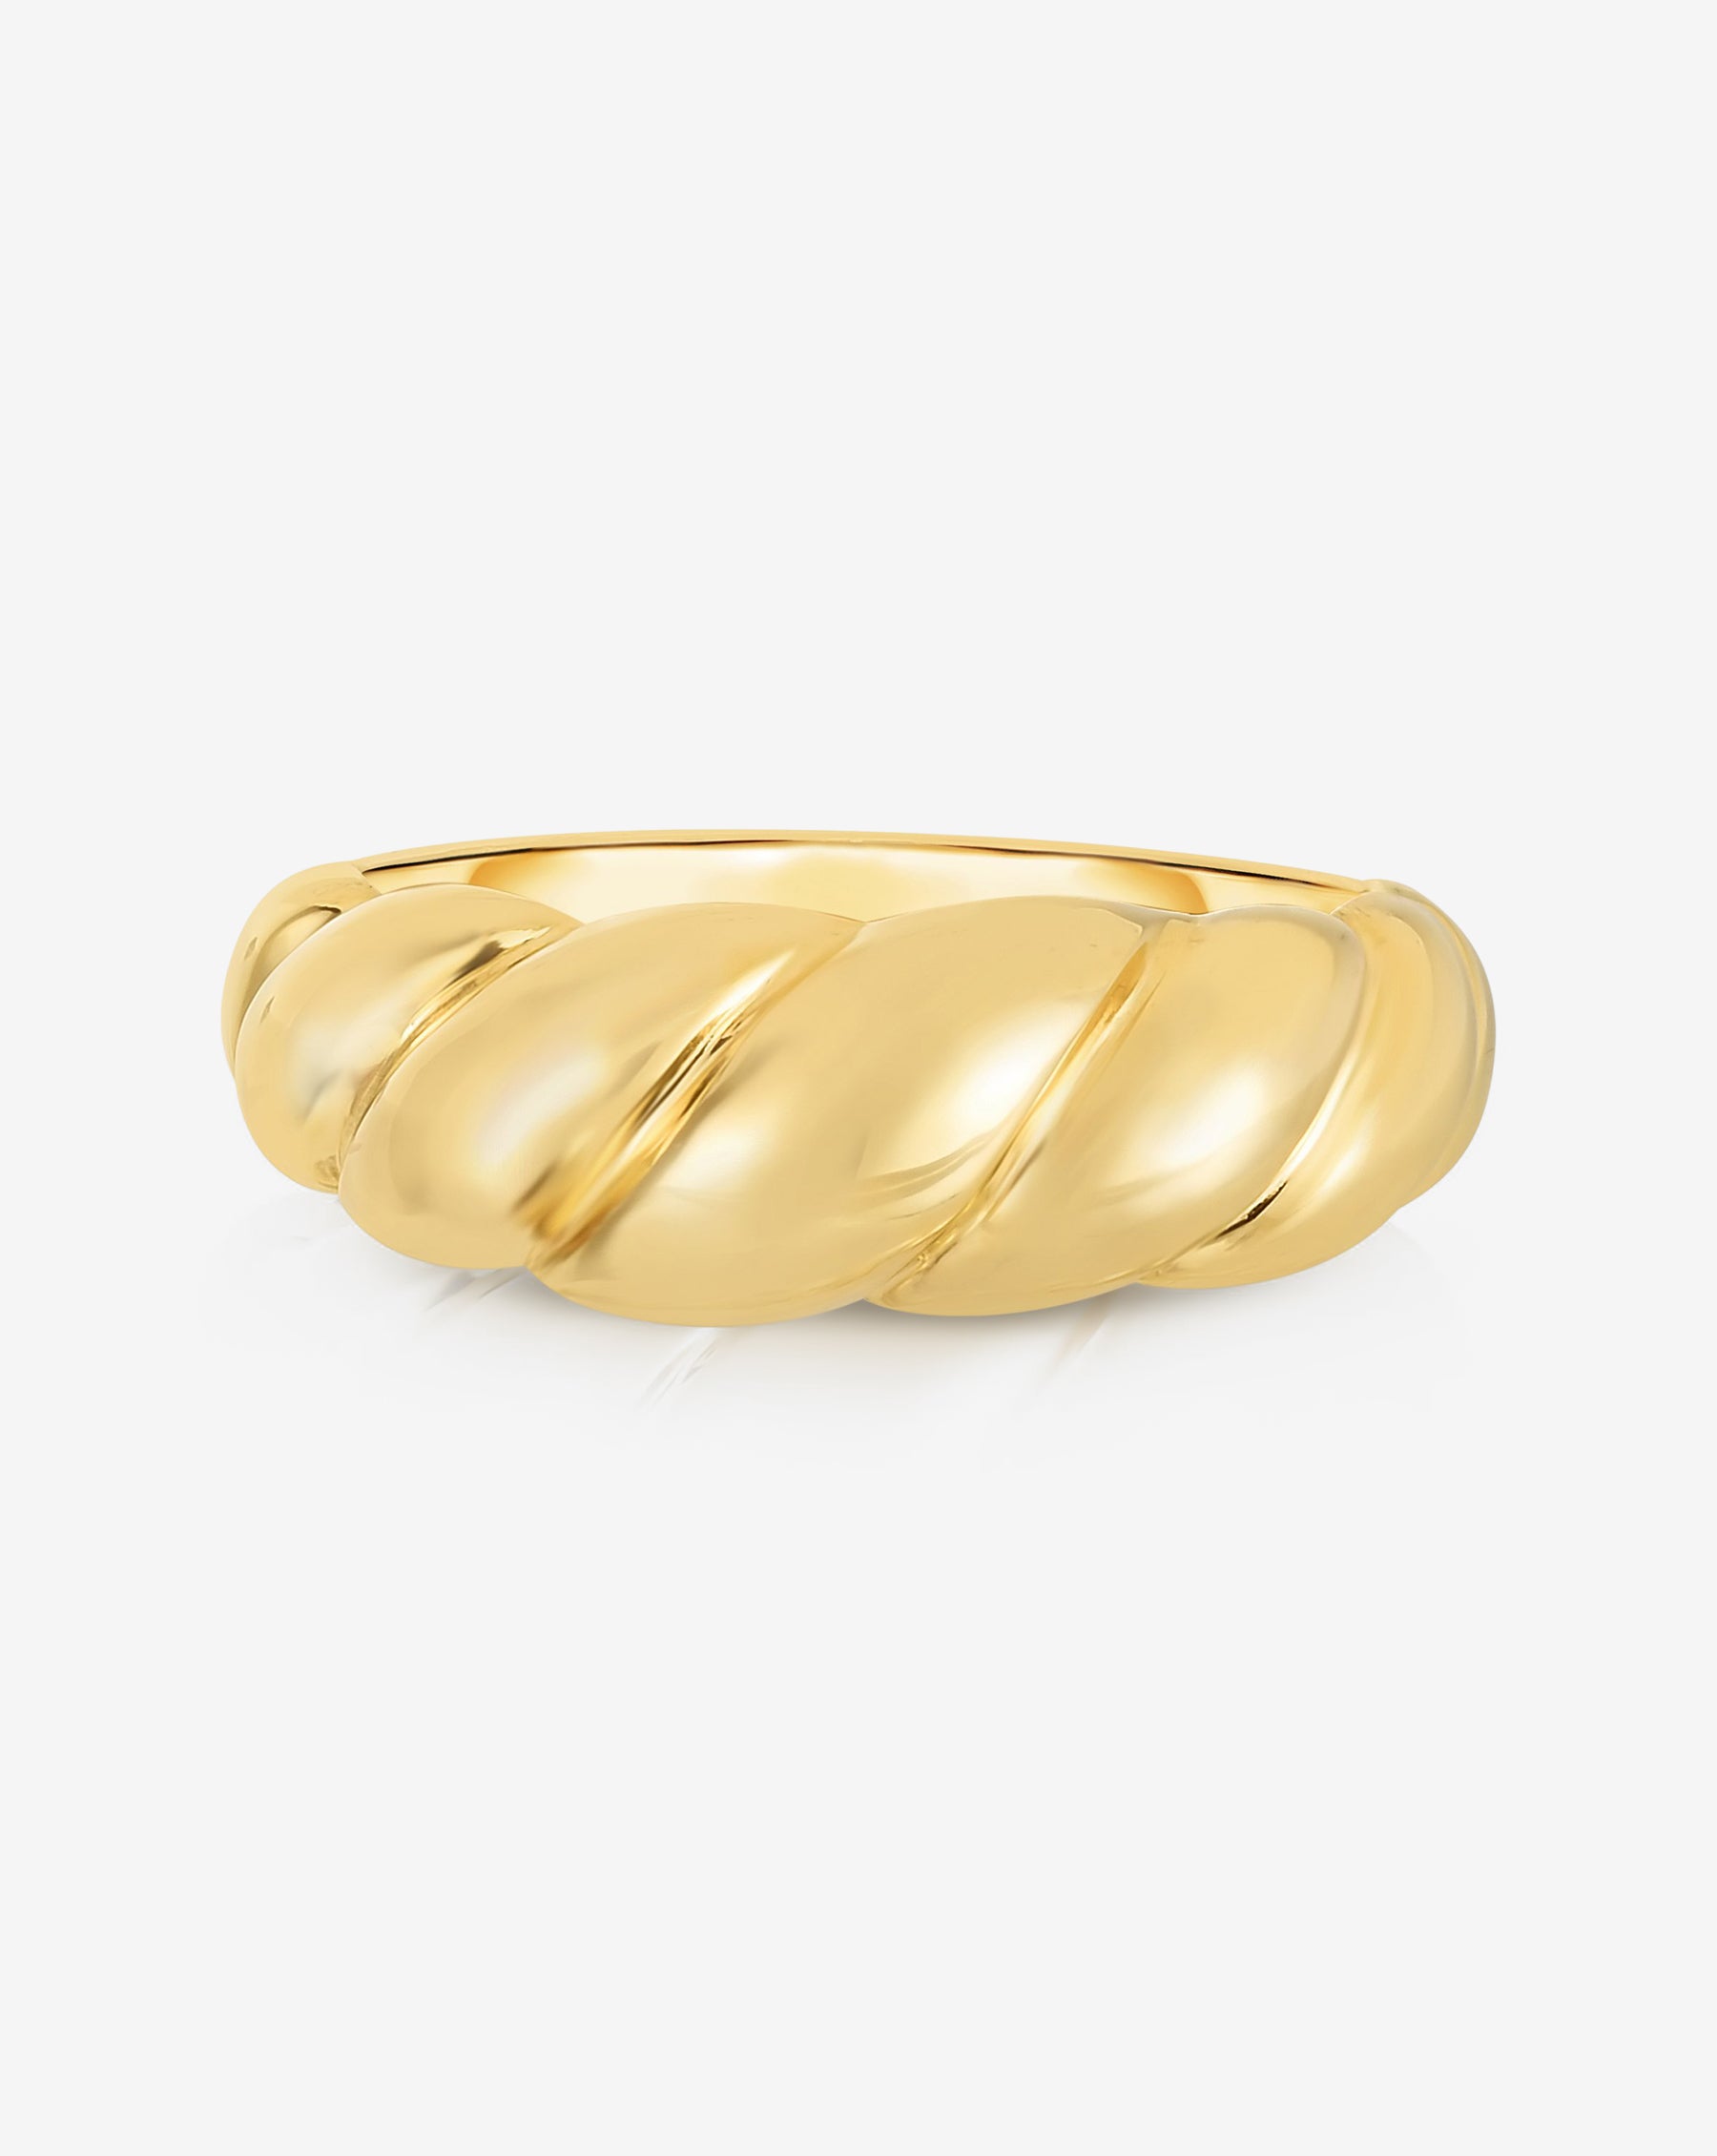 Buy gold ring design for female Online| Kalyan Jewellers